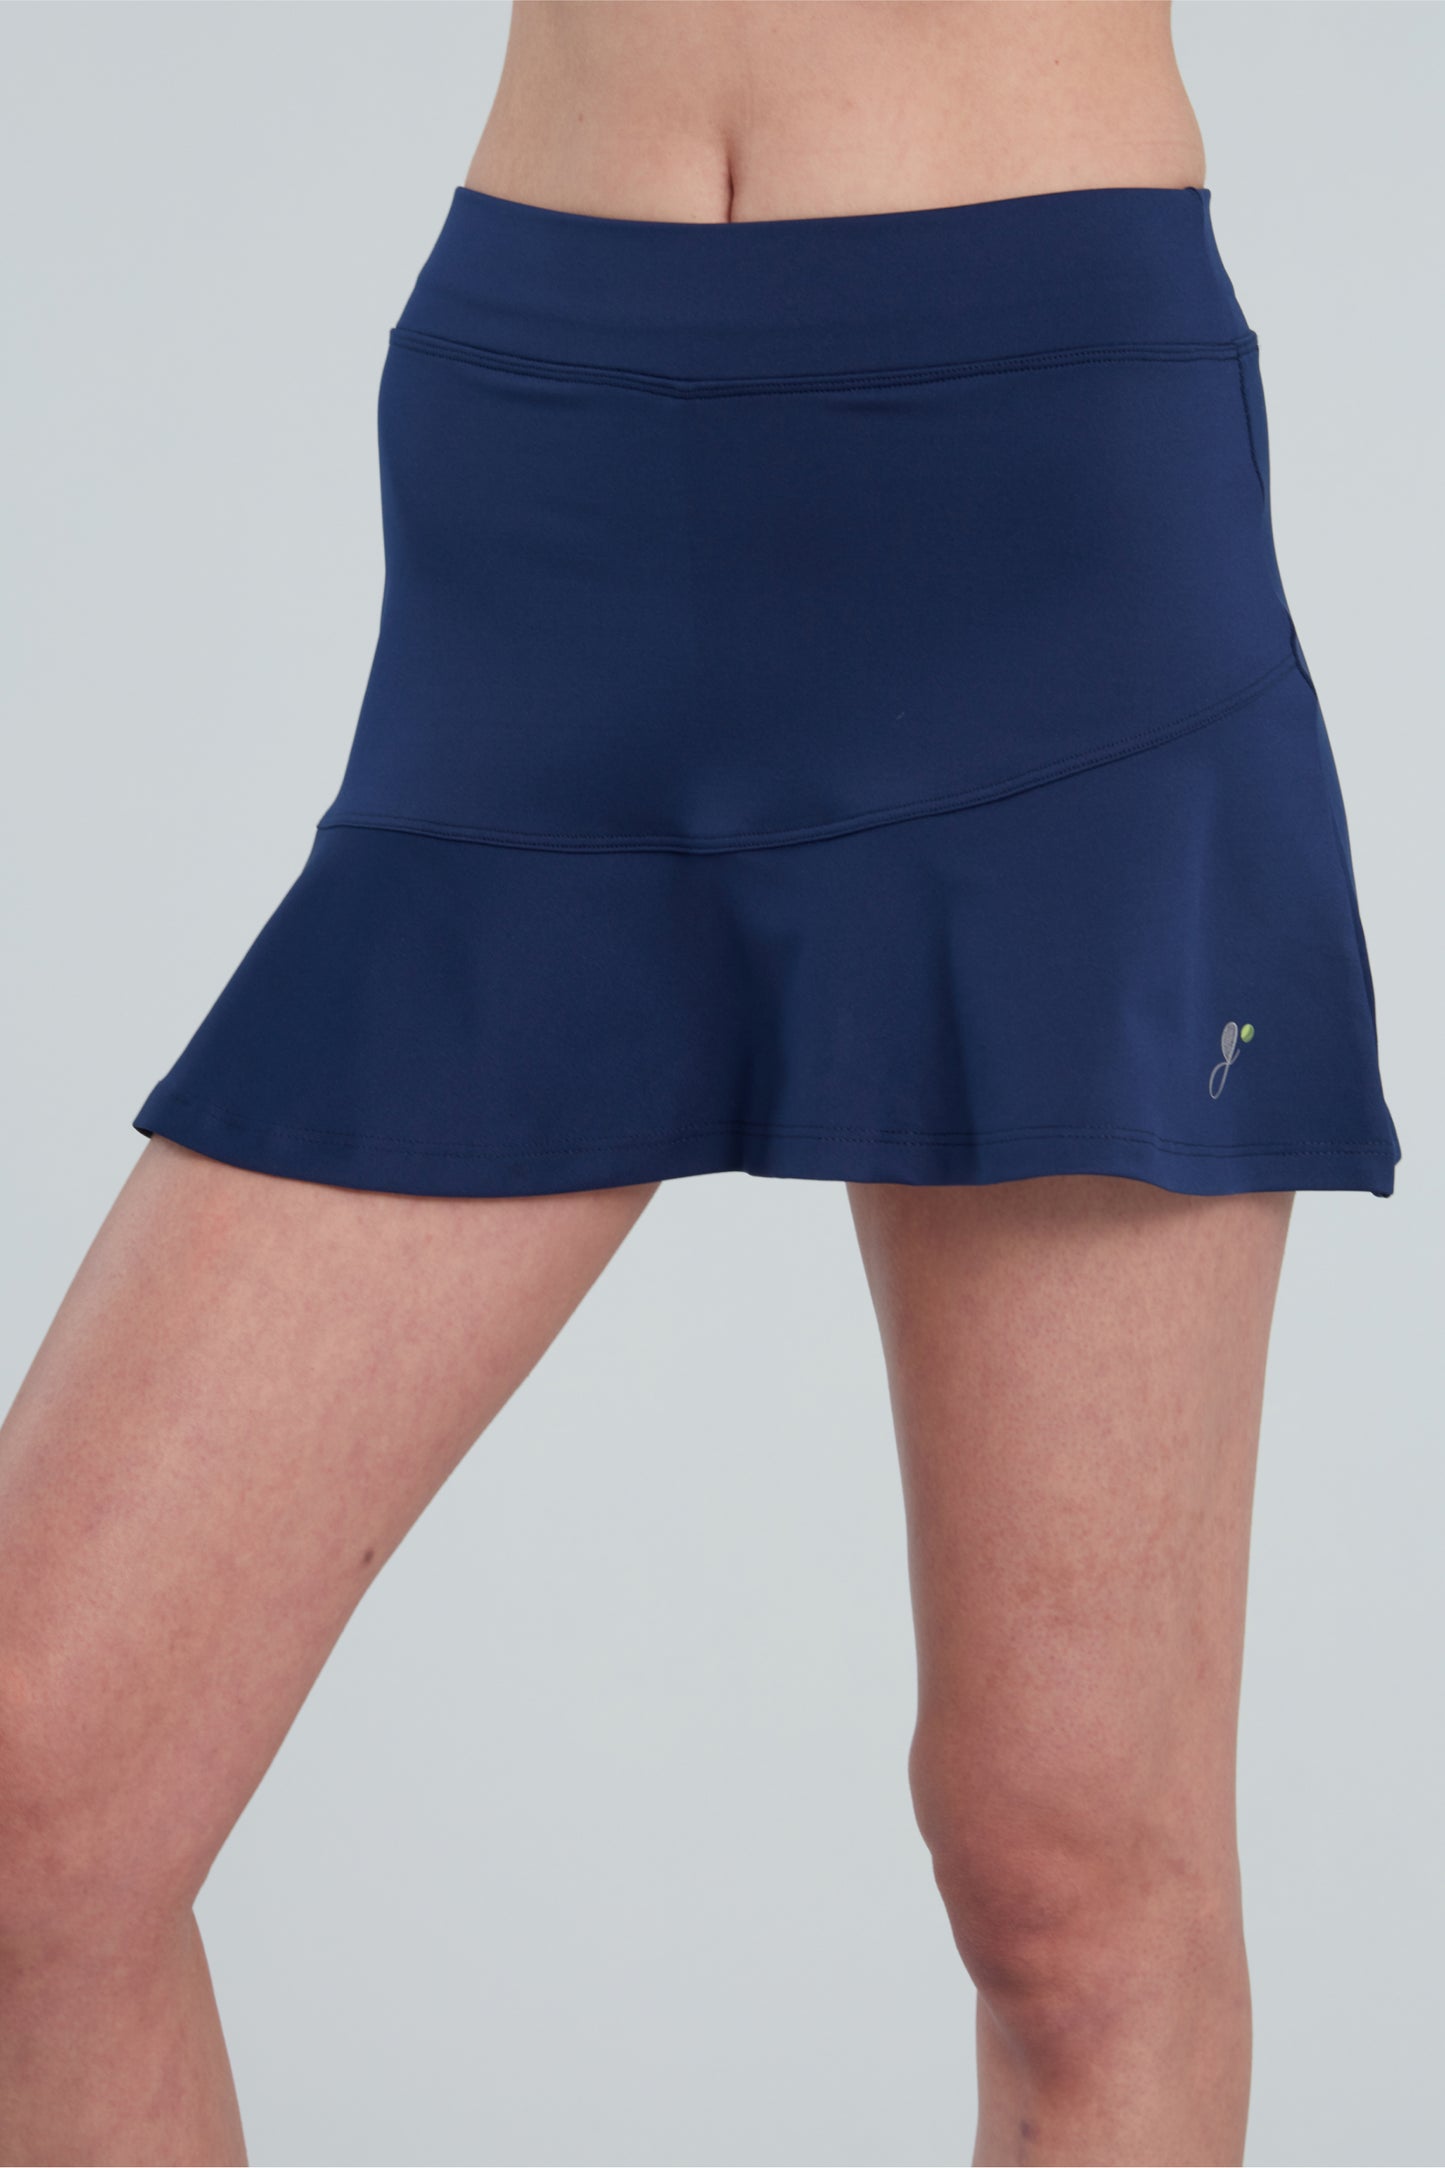 Southampton Navy Blue Tennis Skirt